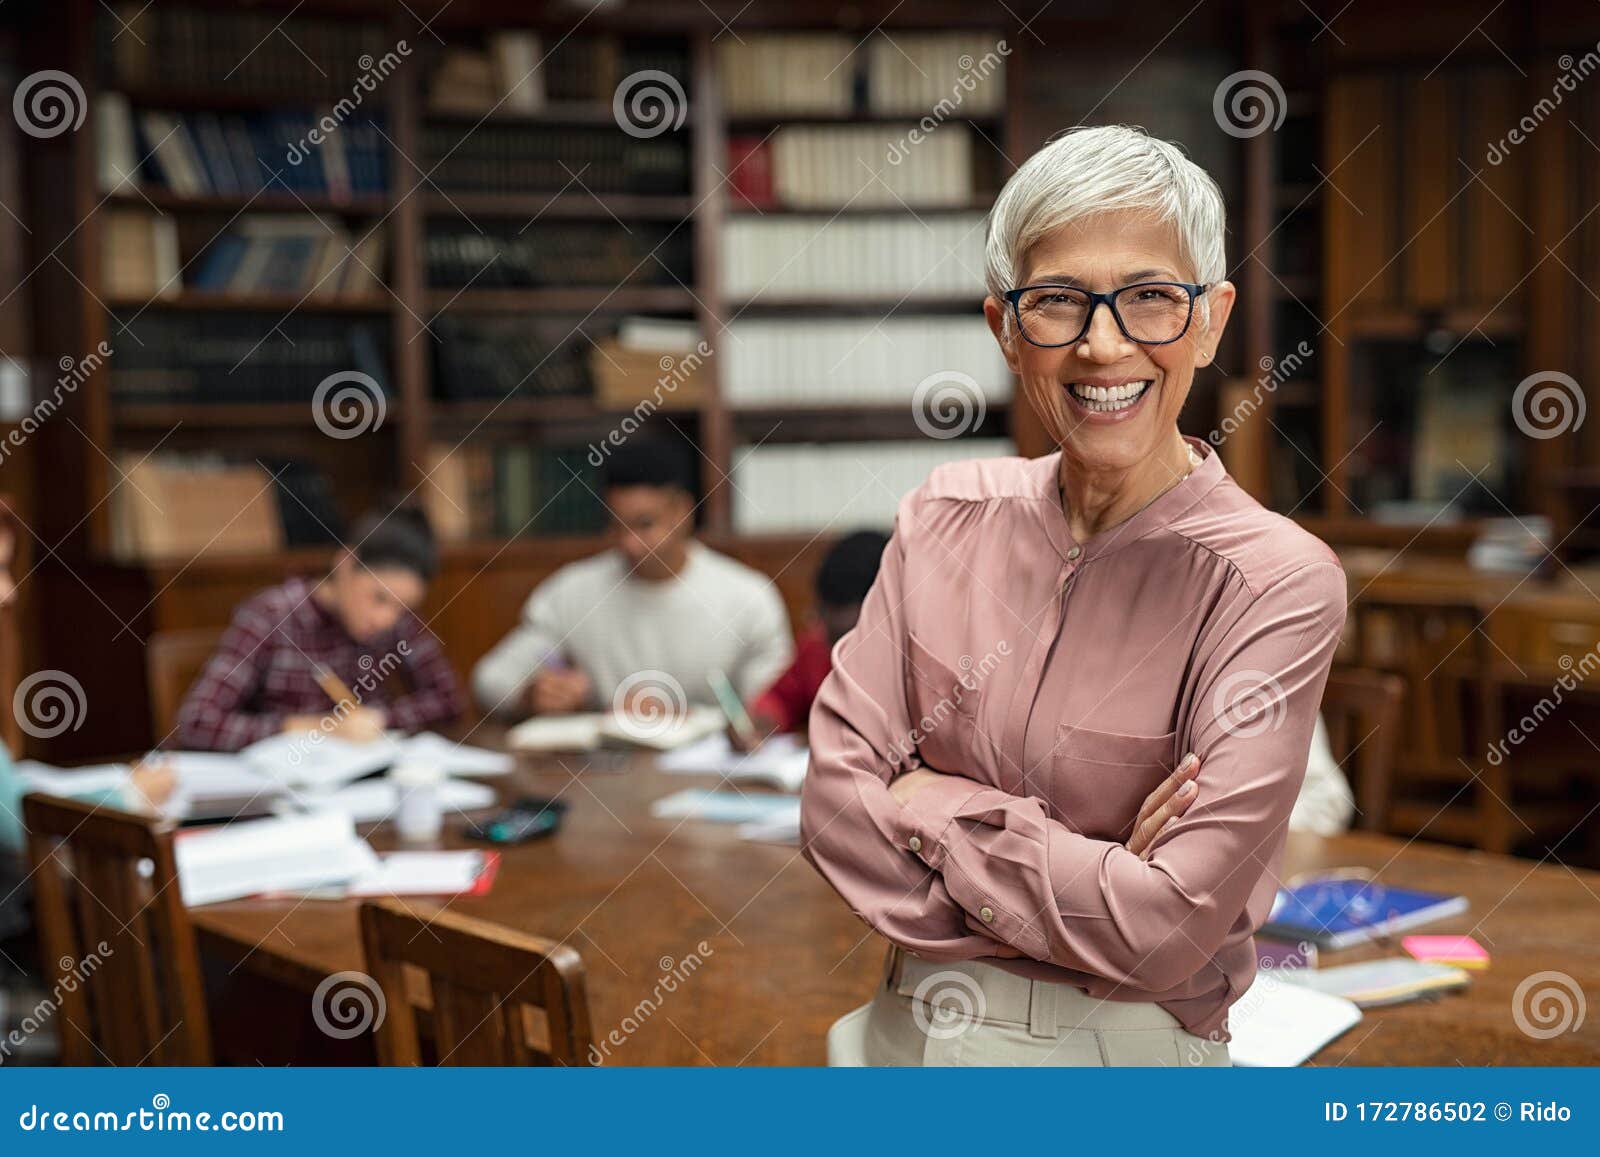 smiling university professor in library